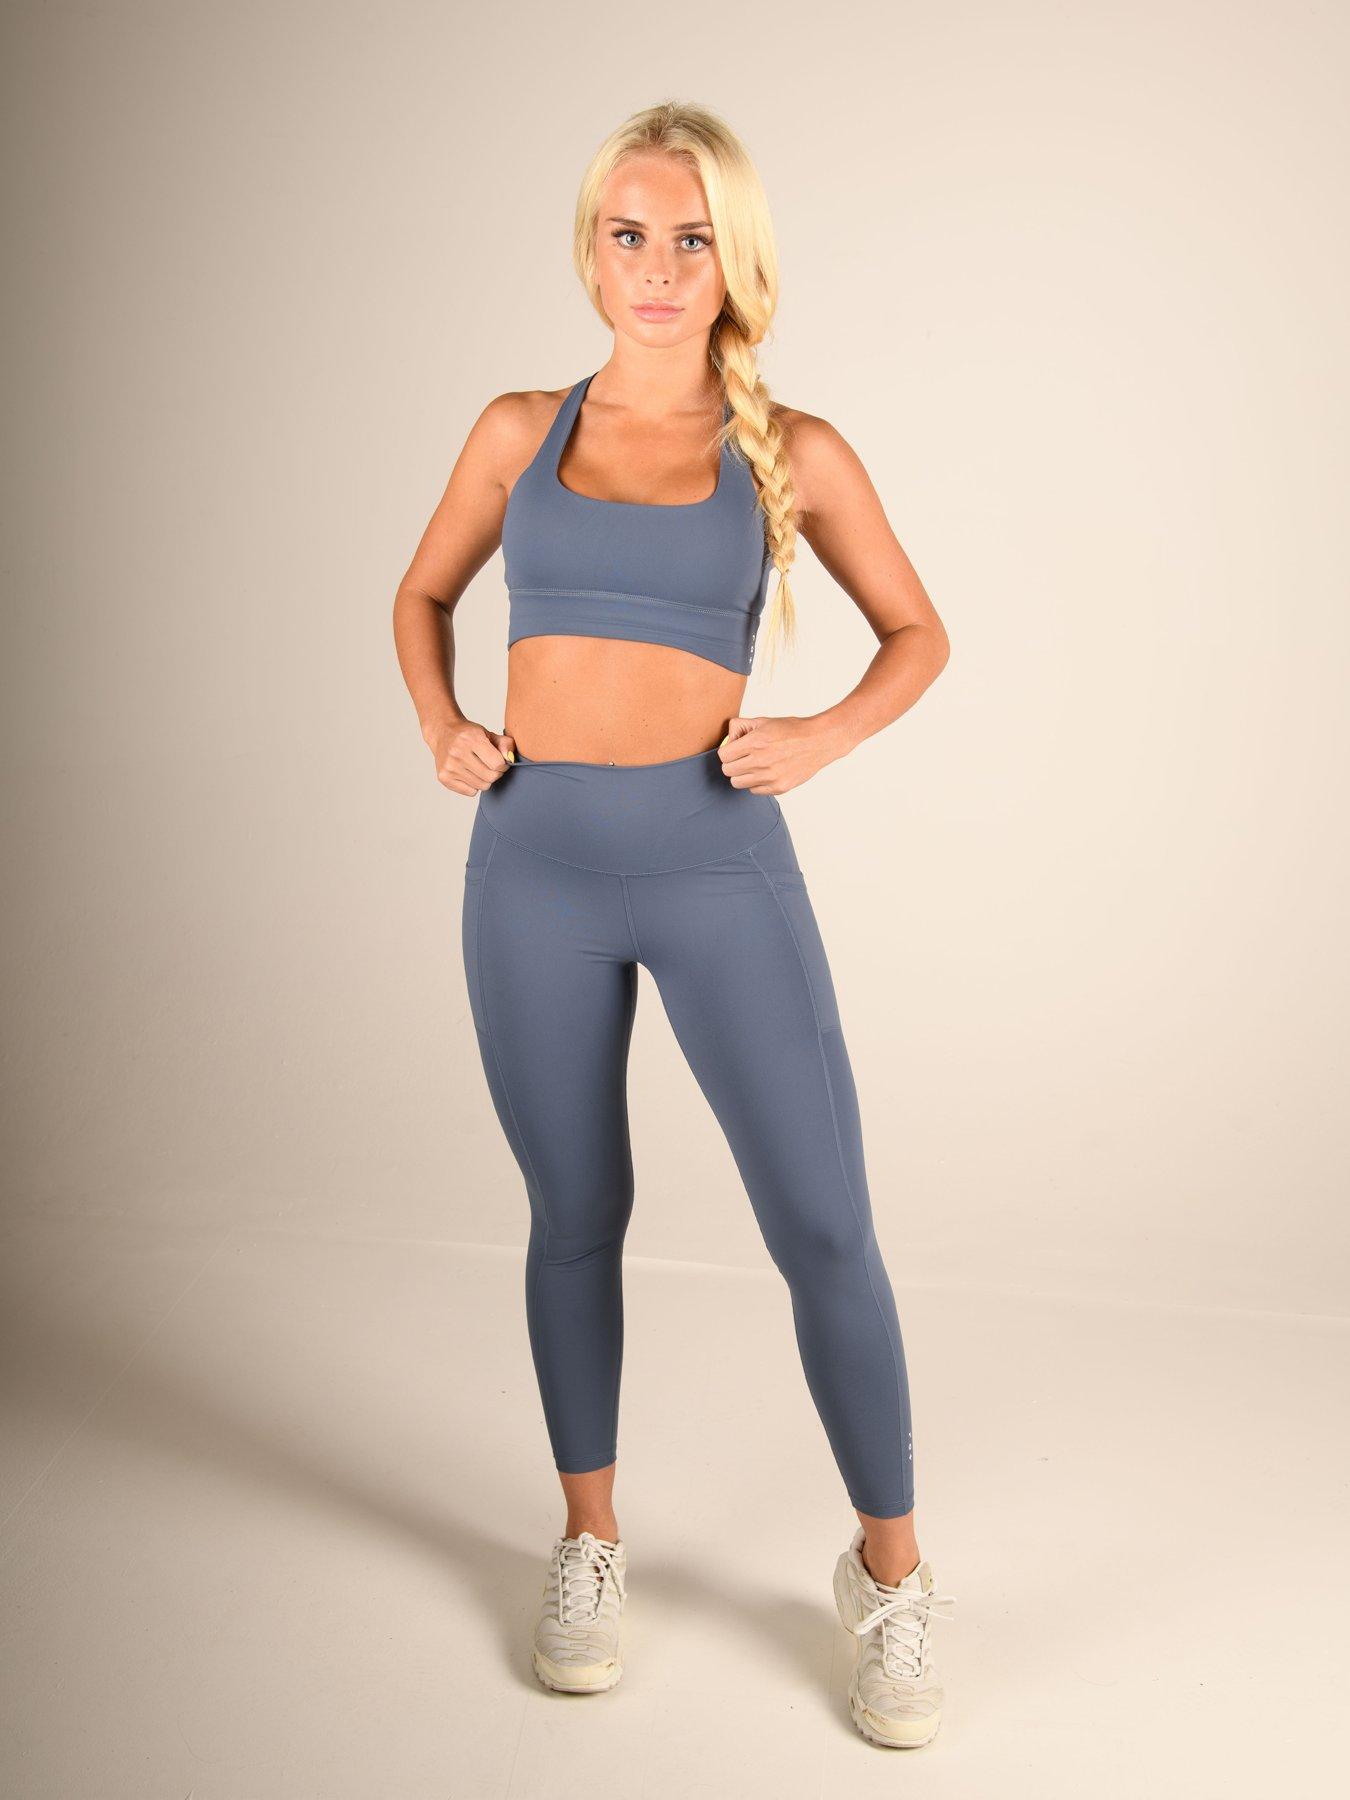 UNDER ARMOUR Womens Training Heat Gear Authentics Legging - Blue/White